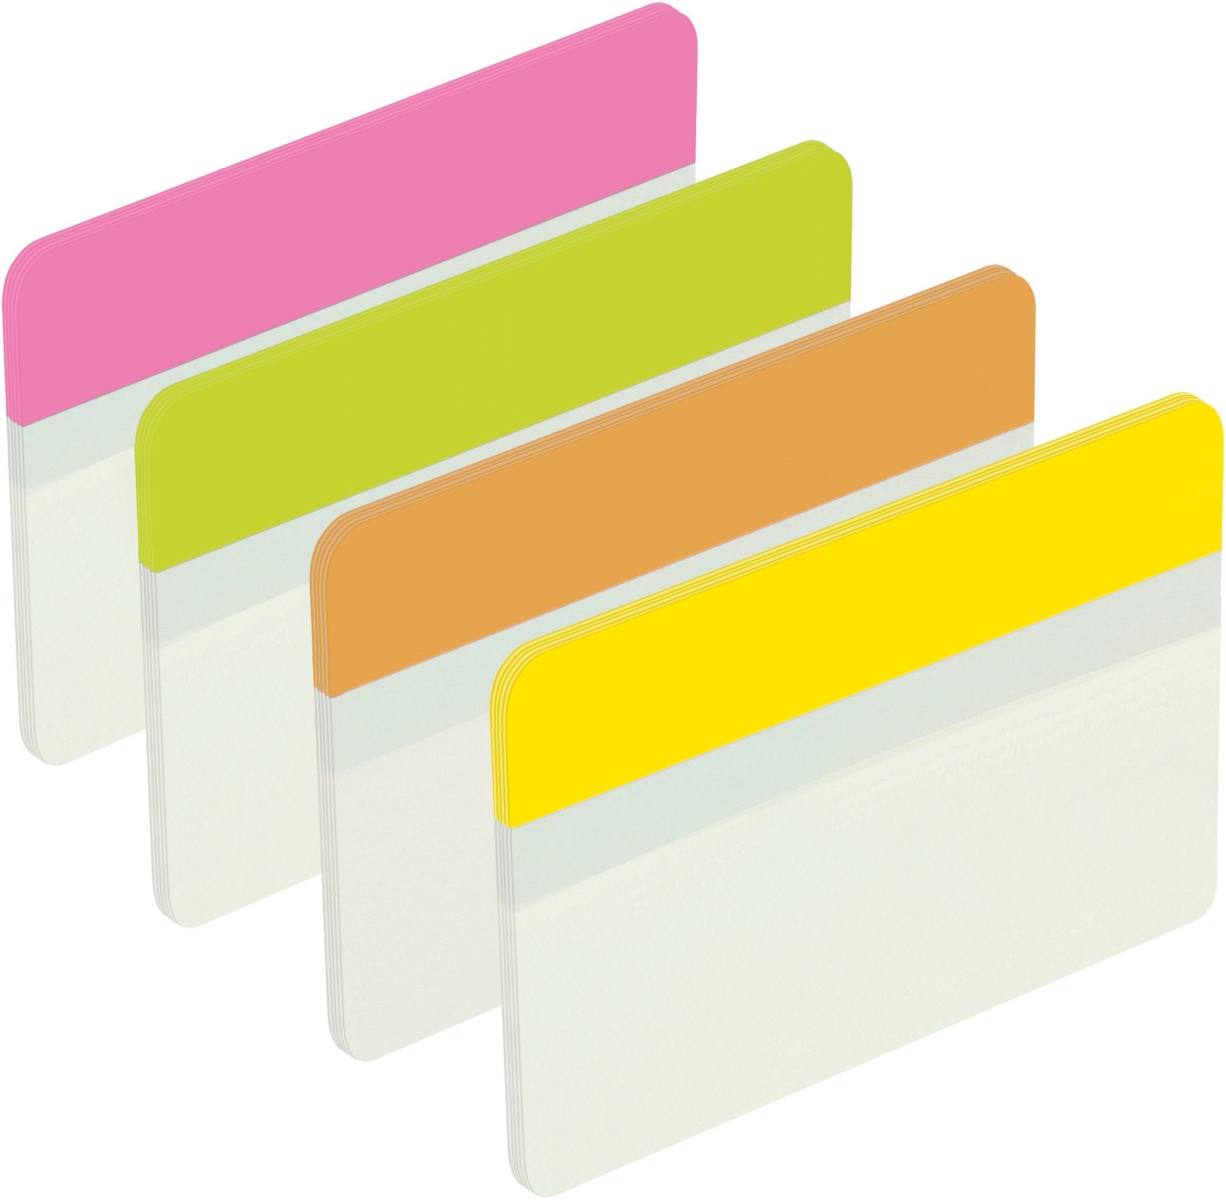 3M Post-it Index Strong 686-PLOY, 50,8 mm x 38 mm, geel, groen, oranje, roze, 4 x 6 plakstrips